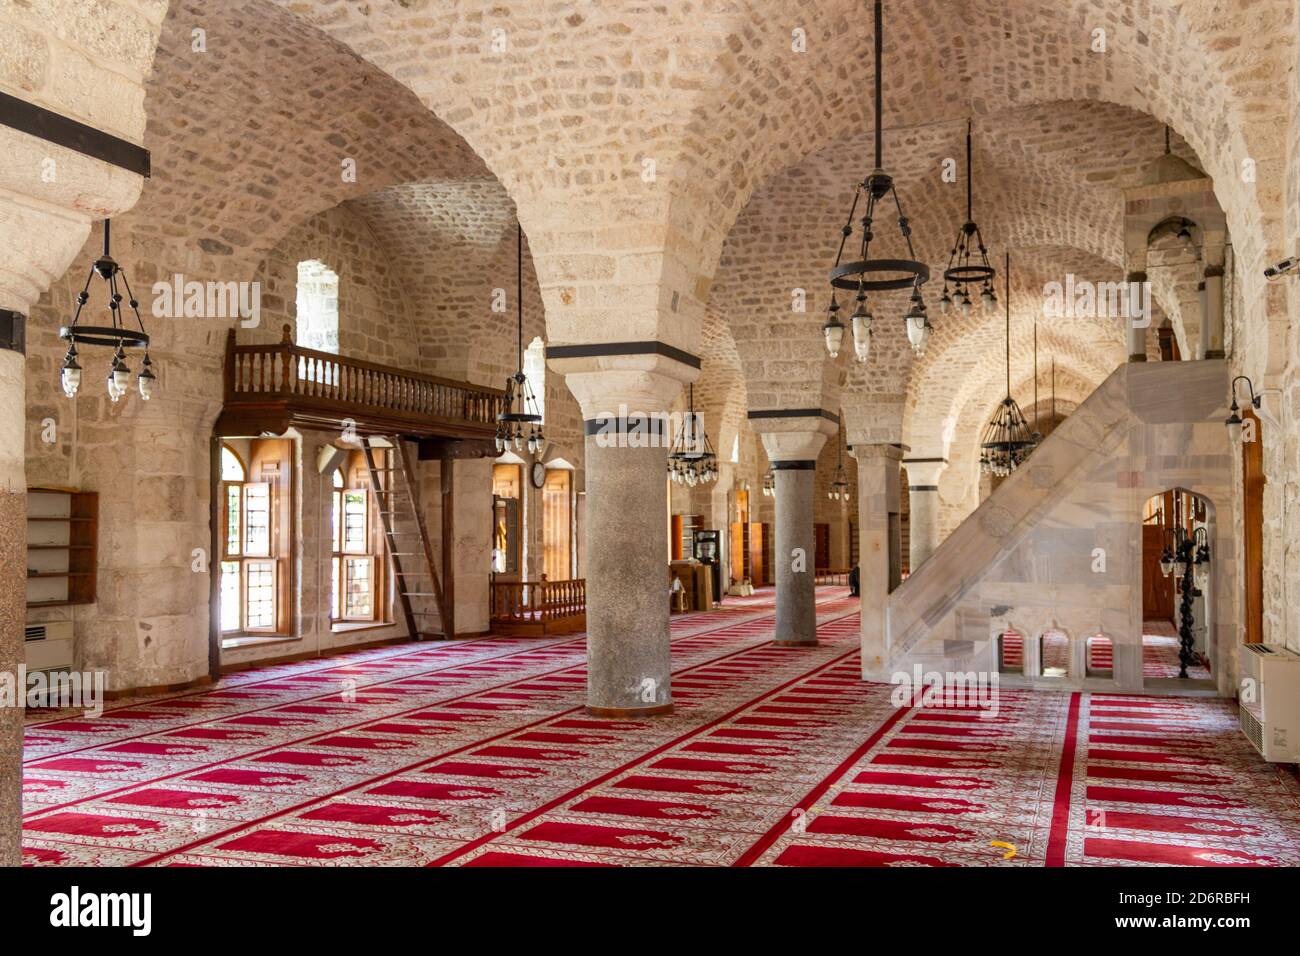 Antakya, Hatay / Turkey - October 08 2020: Antakya Ulu Cami Mosque interior view Stock Photo